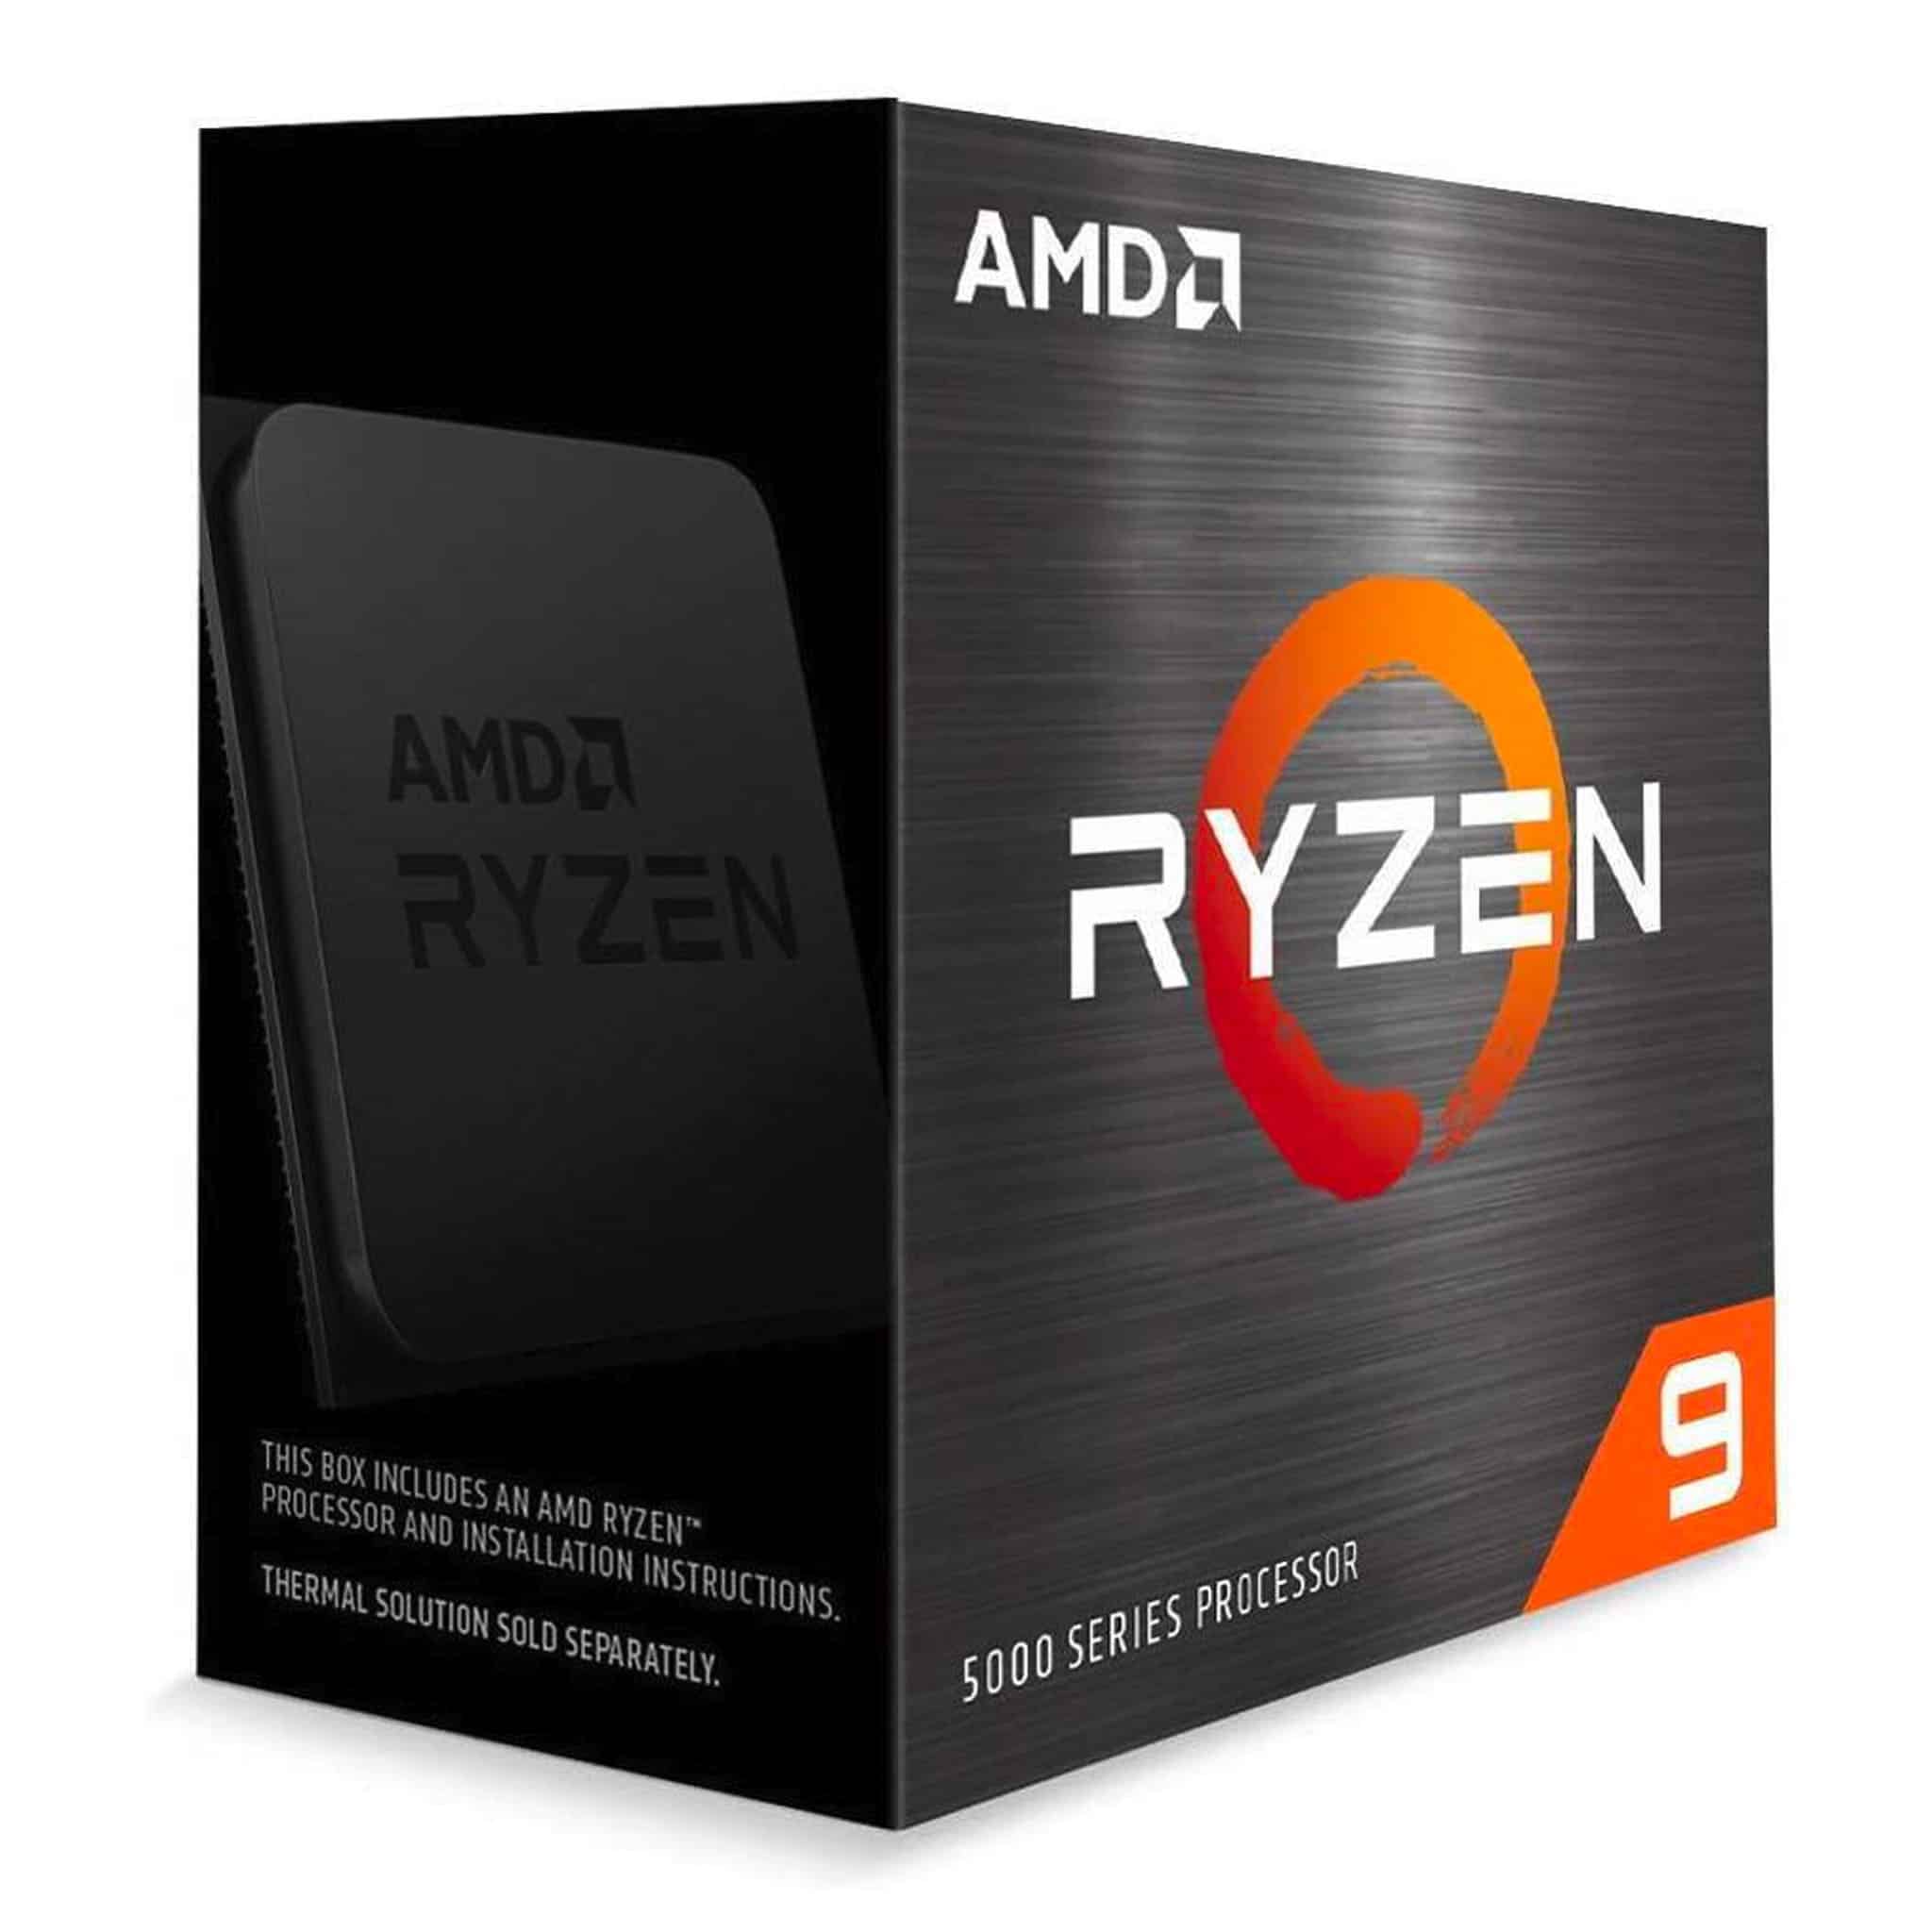 AMD Ryzen 9 5900X 12 Core AM4 3.70 GHz Unlocked CPU Processor (4.8 GHz Max Boost)